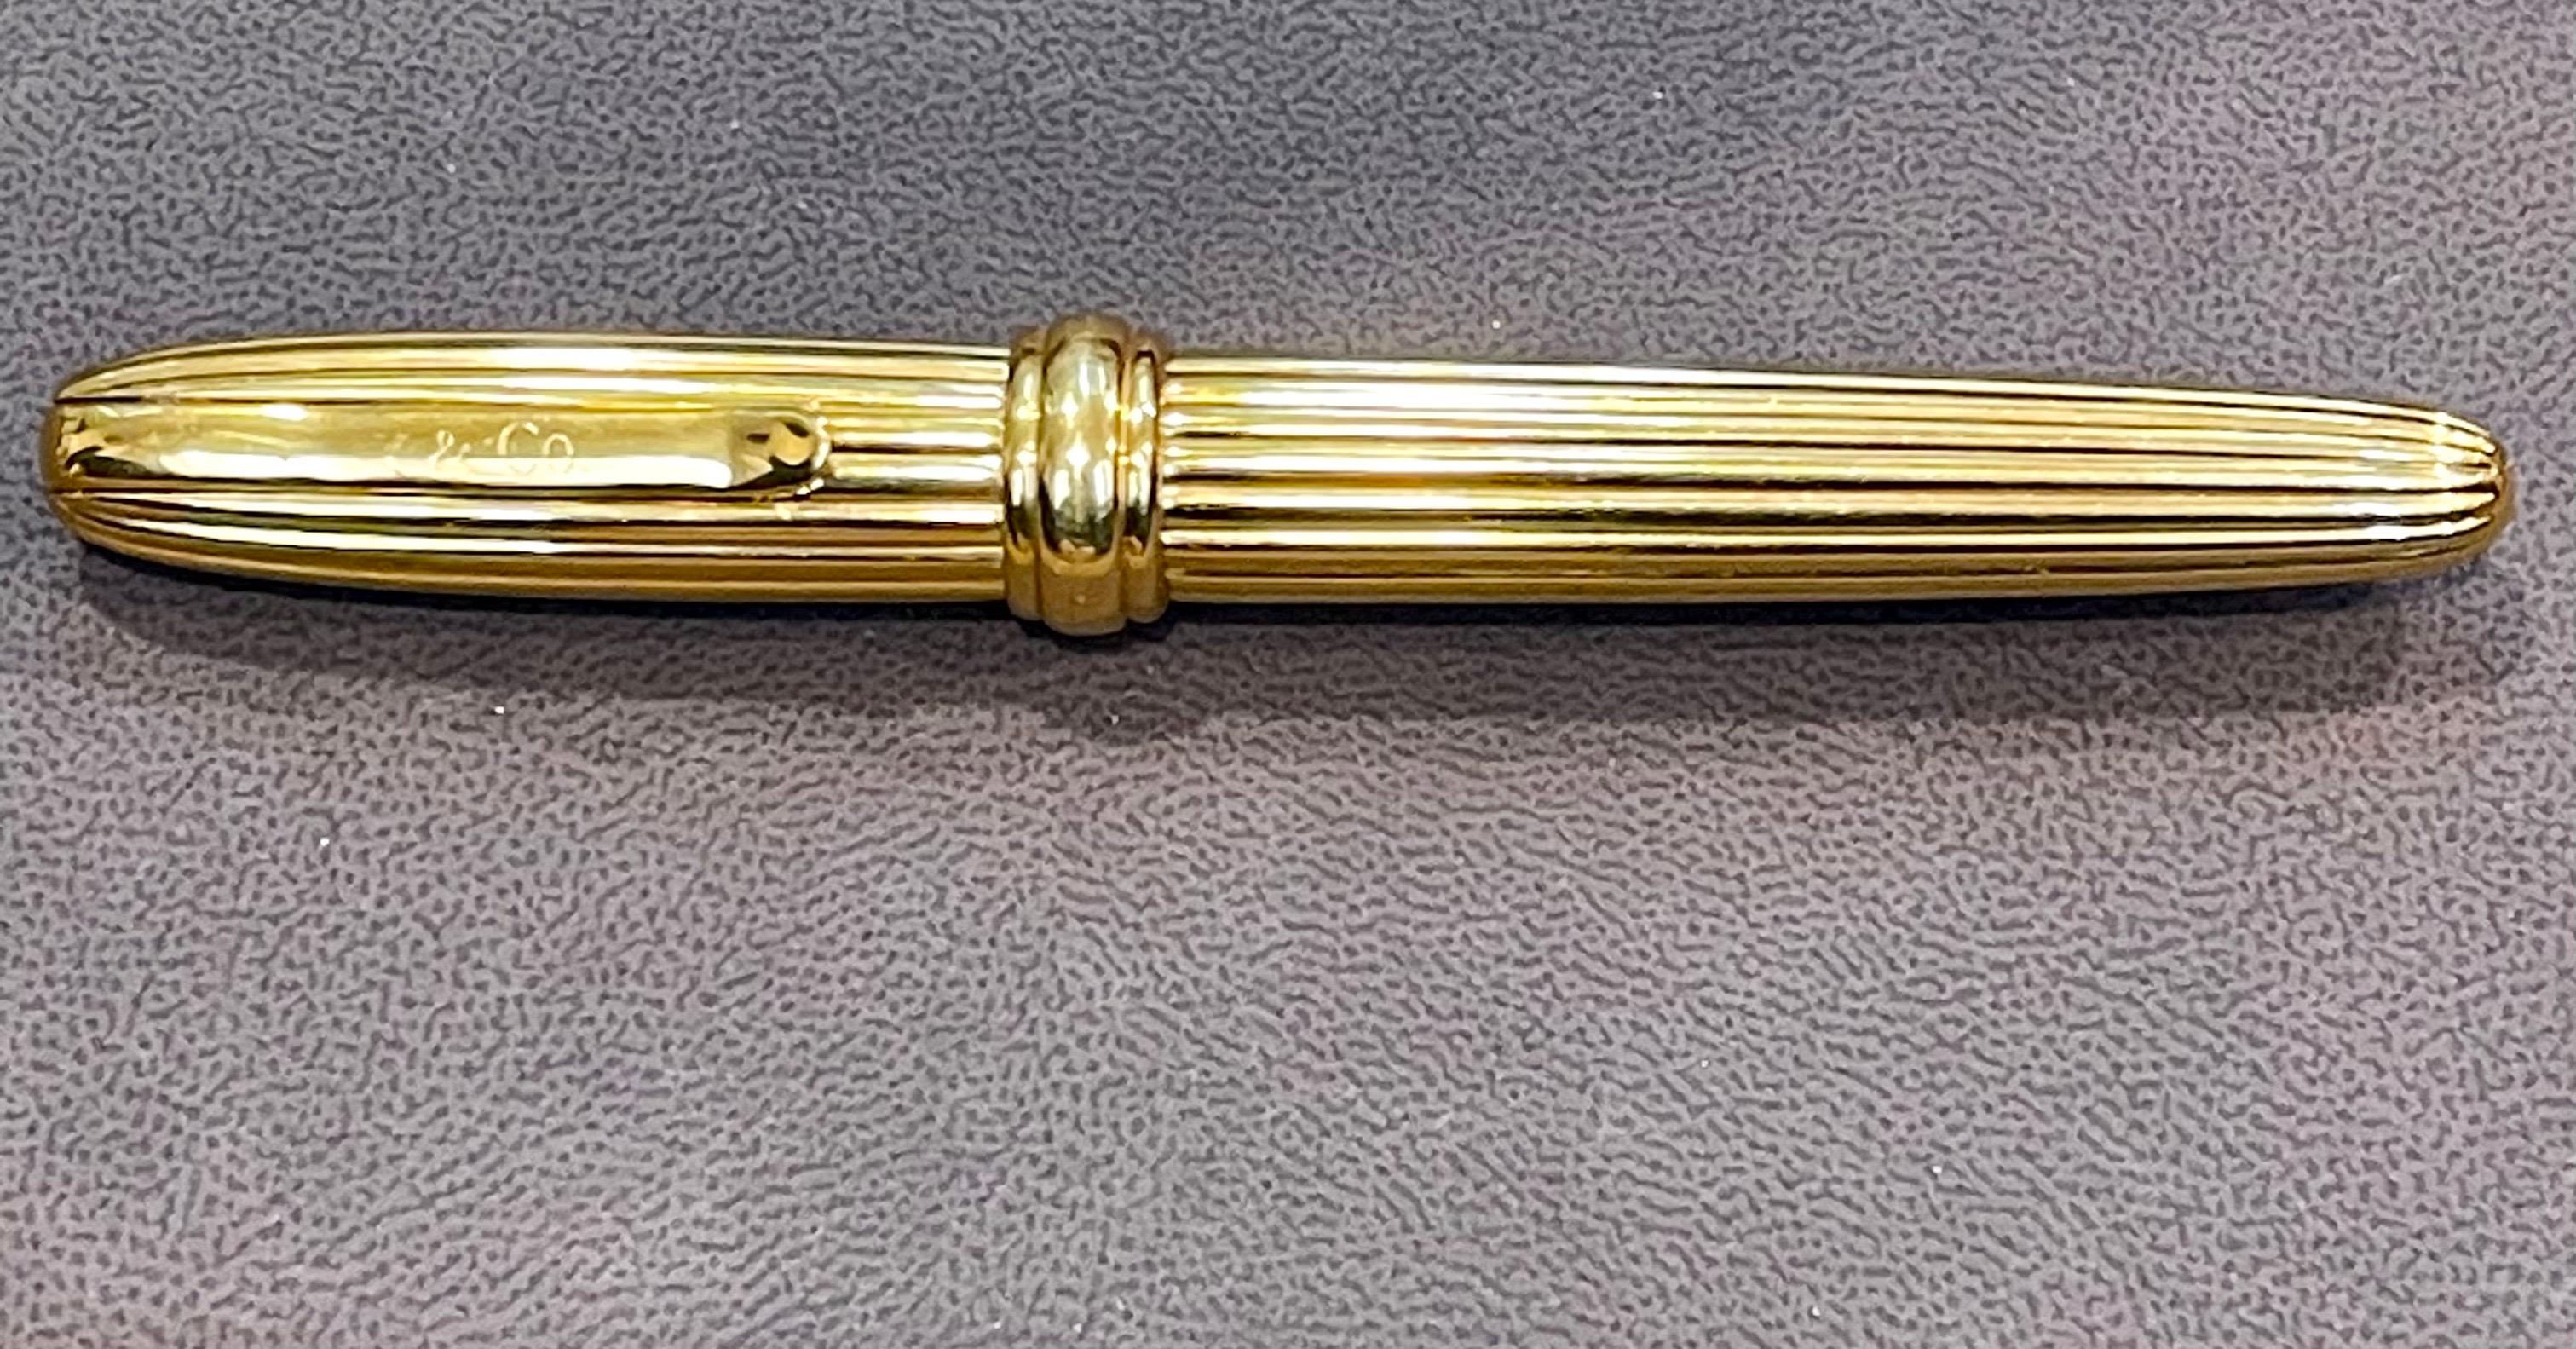 Tiffany & Co Tesoro Executive Fountain Pen Gold Plate 18k Nib w/Case Excellent 4